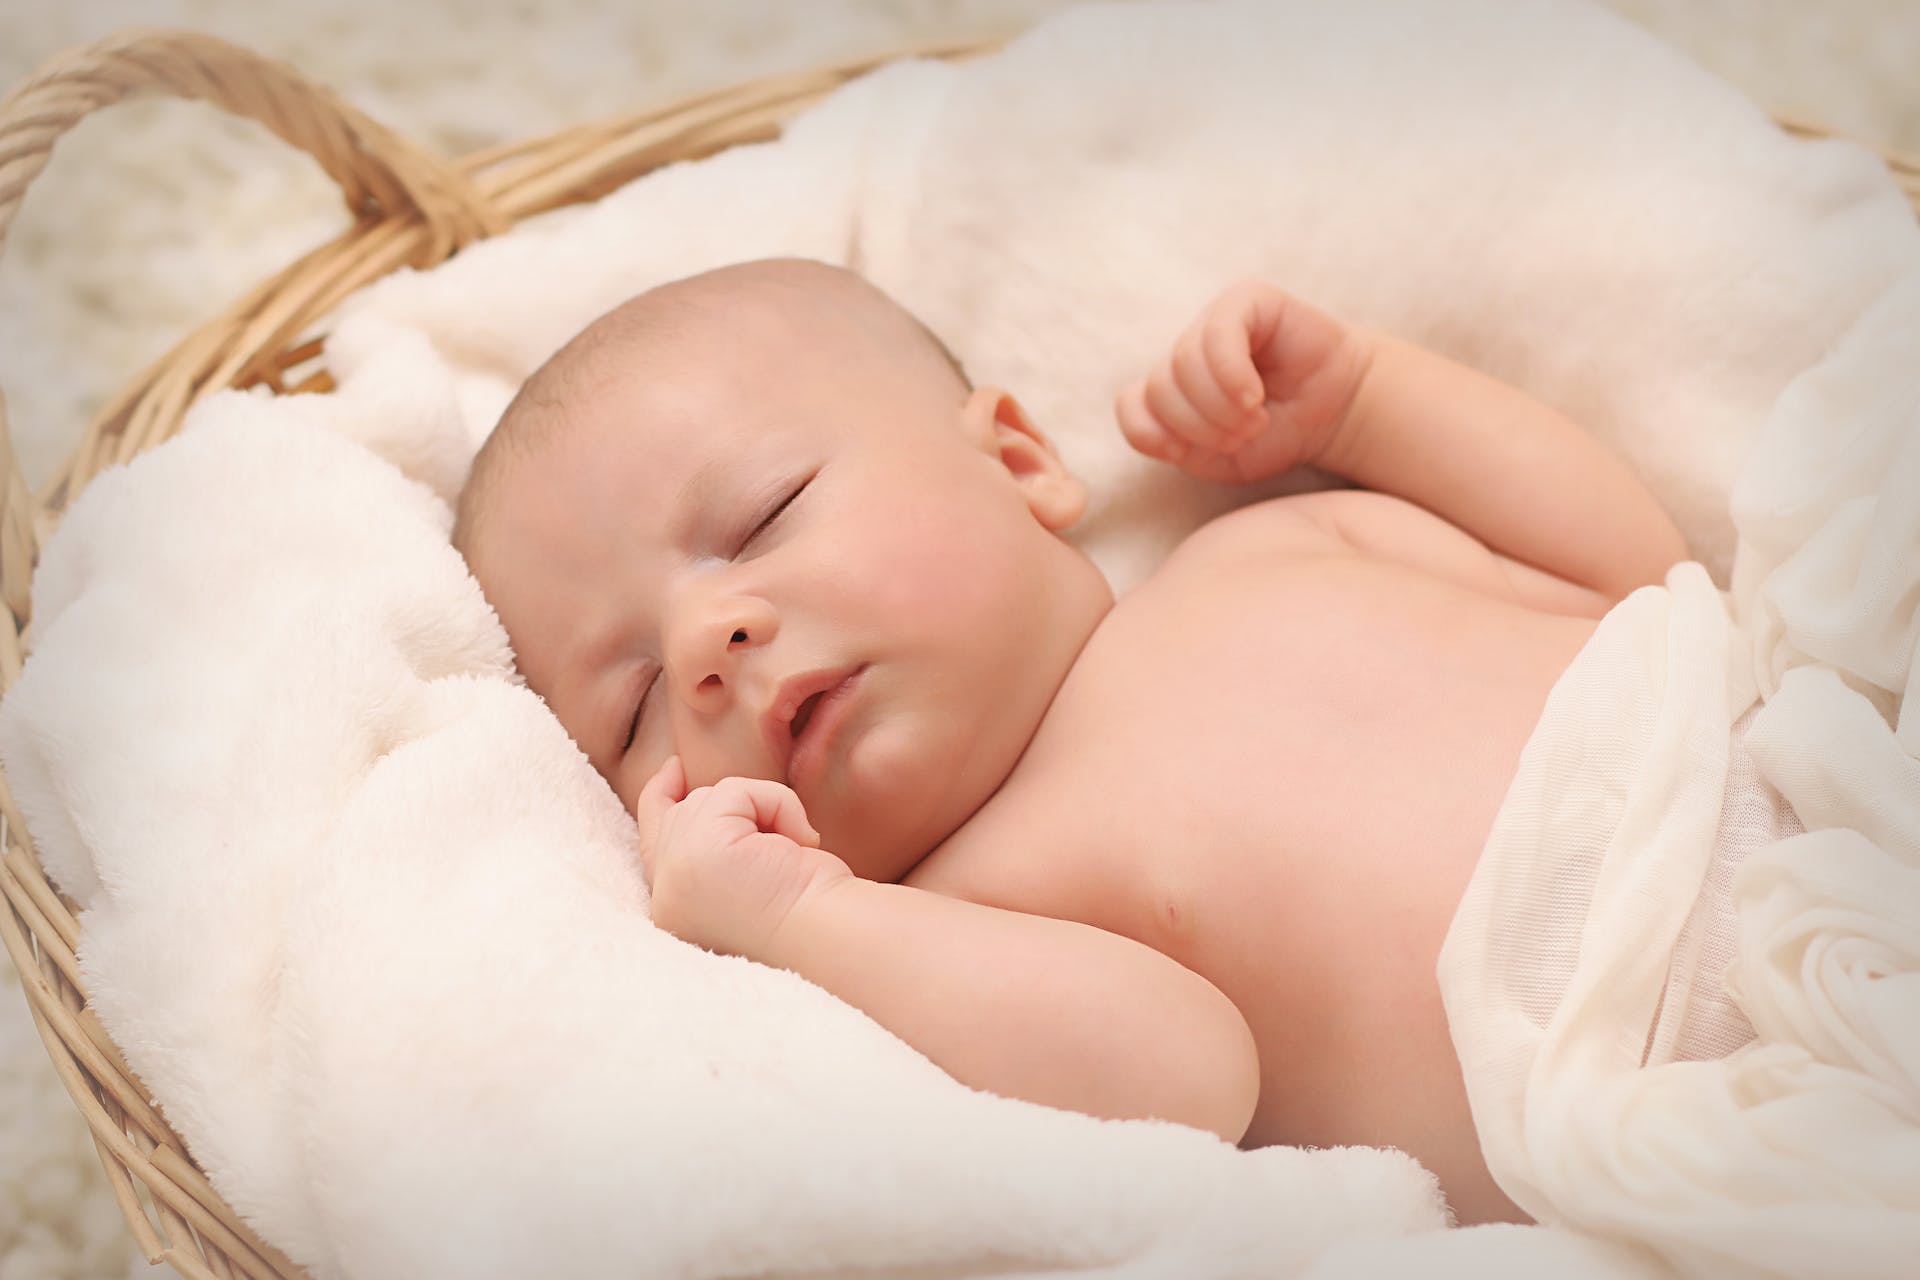 Newborn baby | Source: Pexels